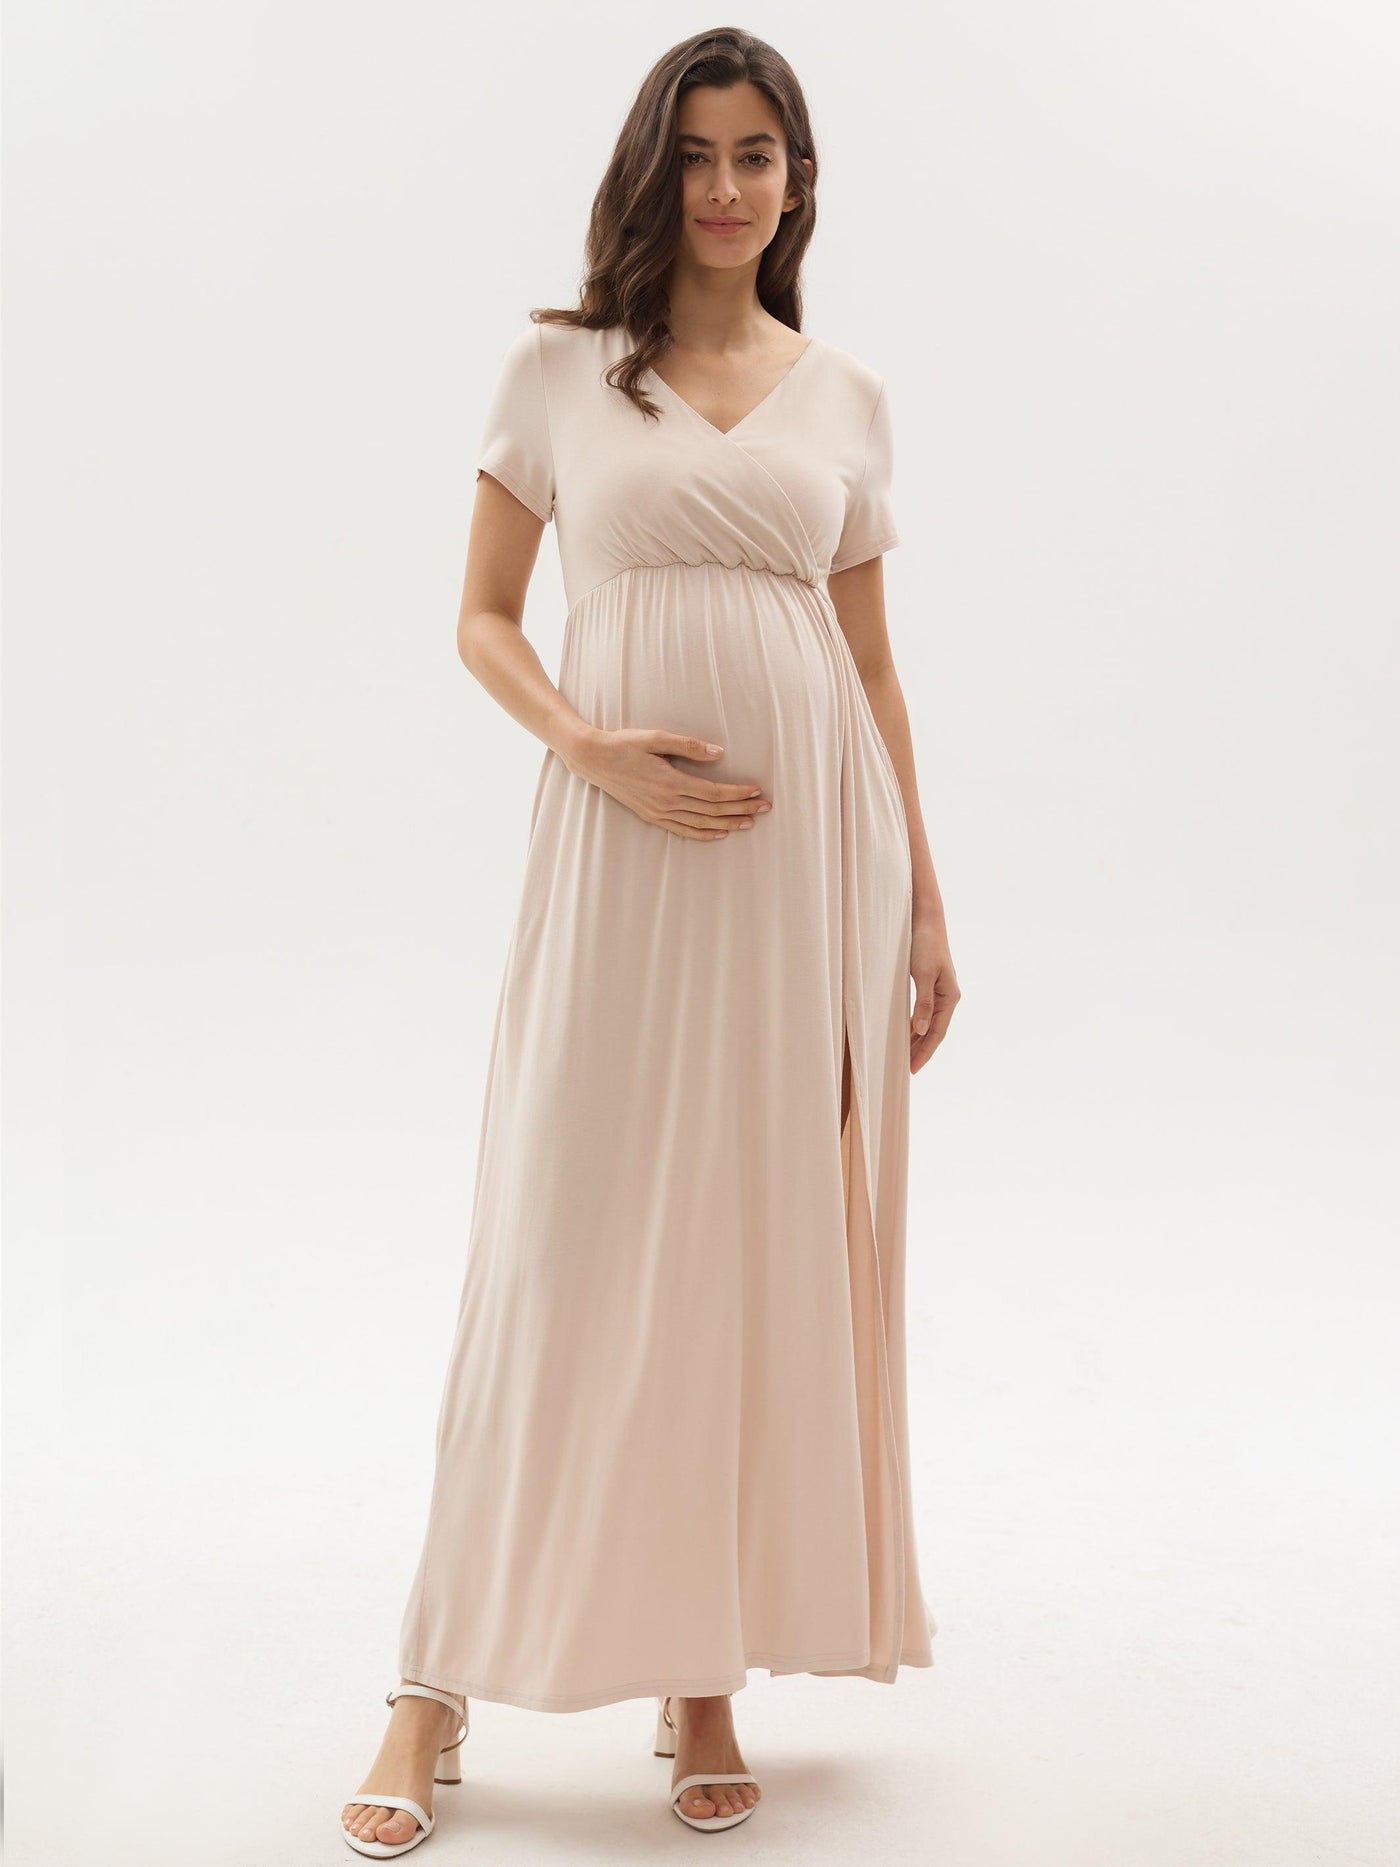 Beige V-Neck Draped Side Slit Maternity/Nursing Maxi Dress - Leolace